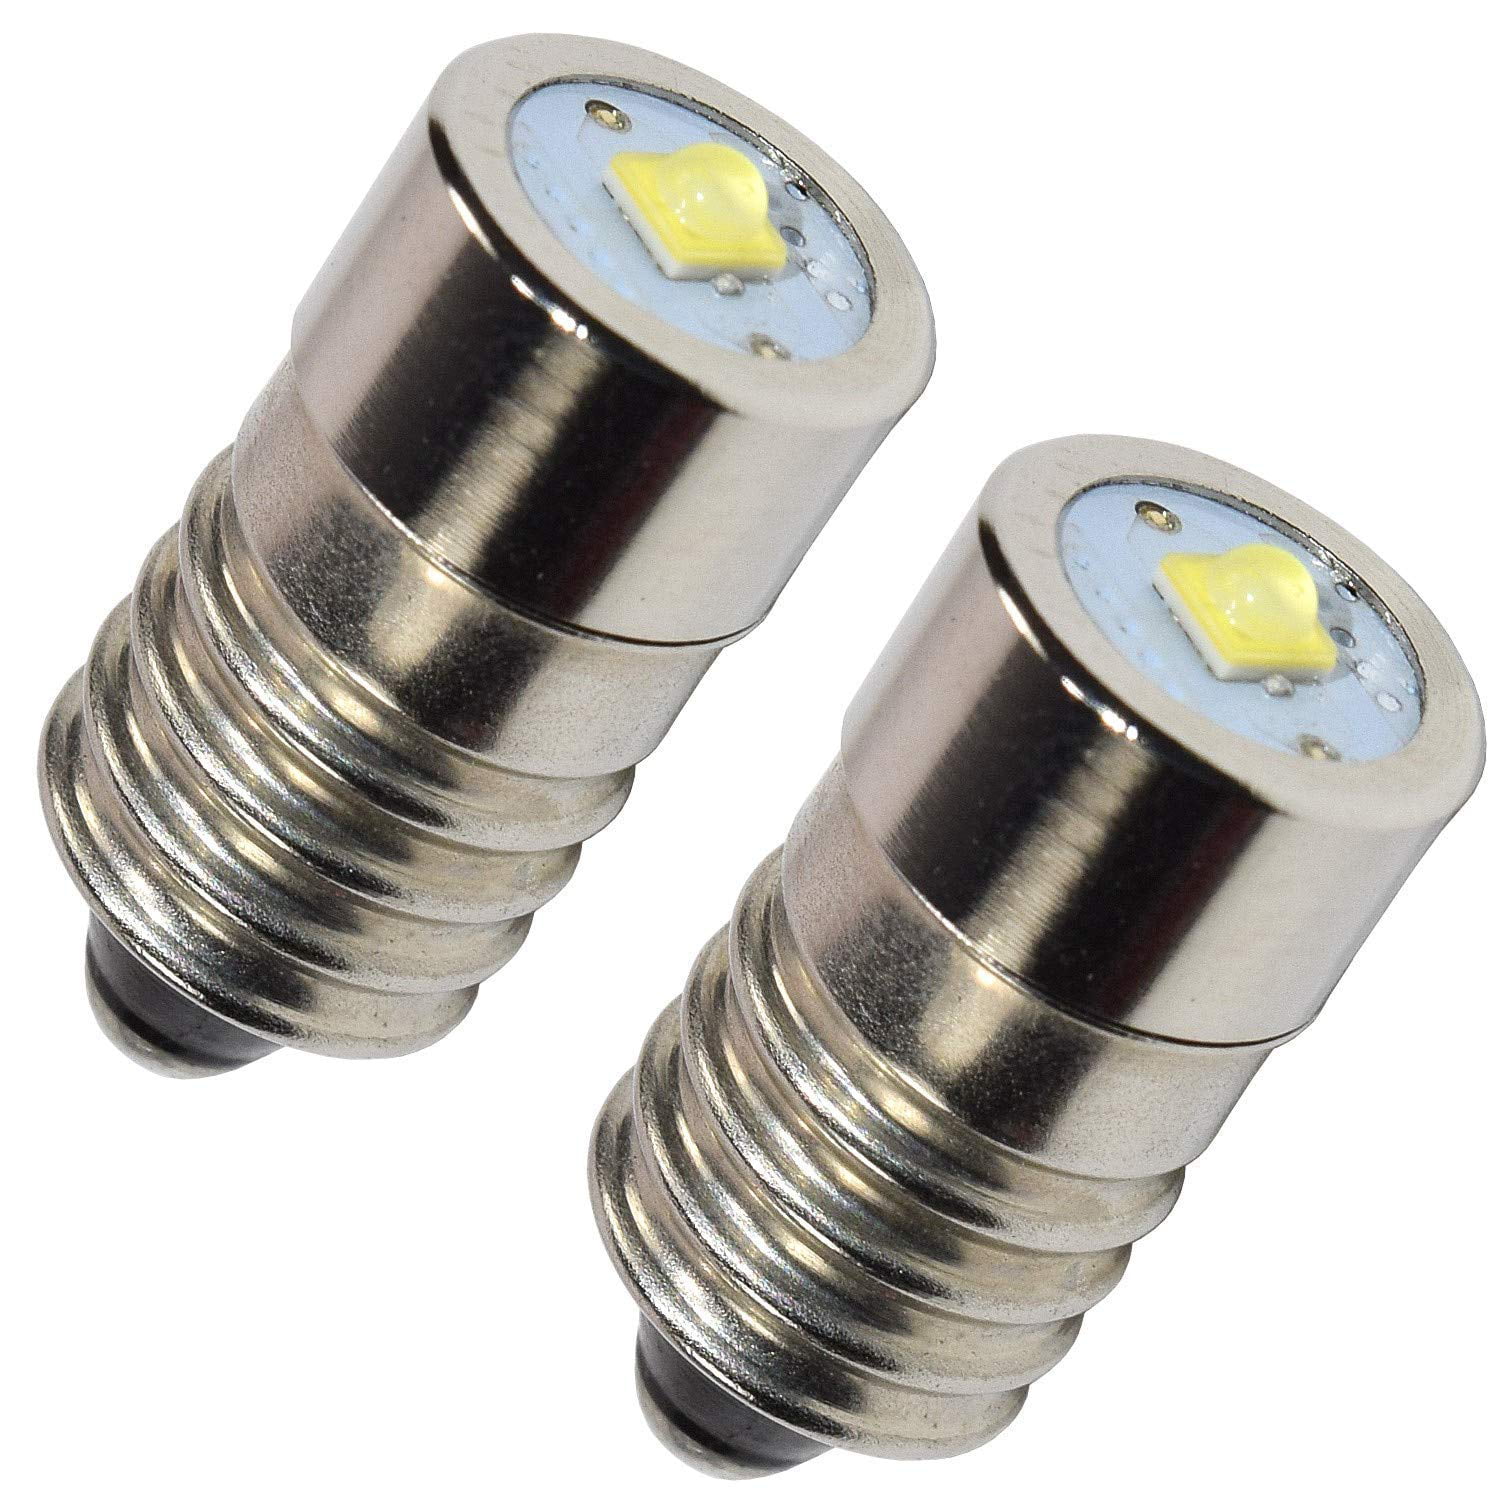 PETZL Zoom/Duo MES E10 Screw LED Bulb CREE UPGRADE LAMP Head Torch 